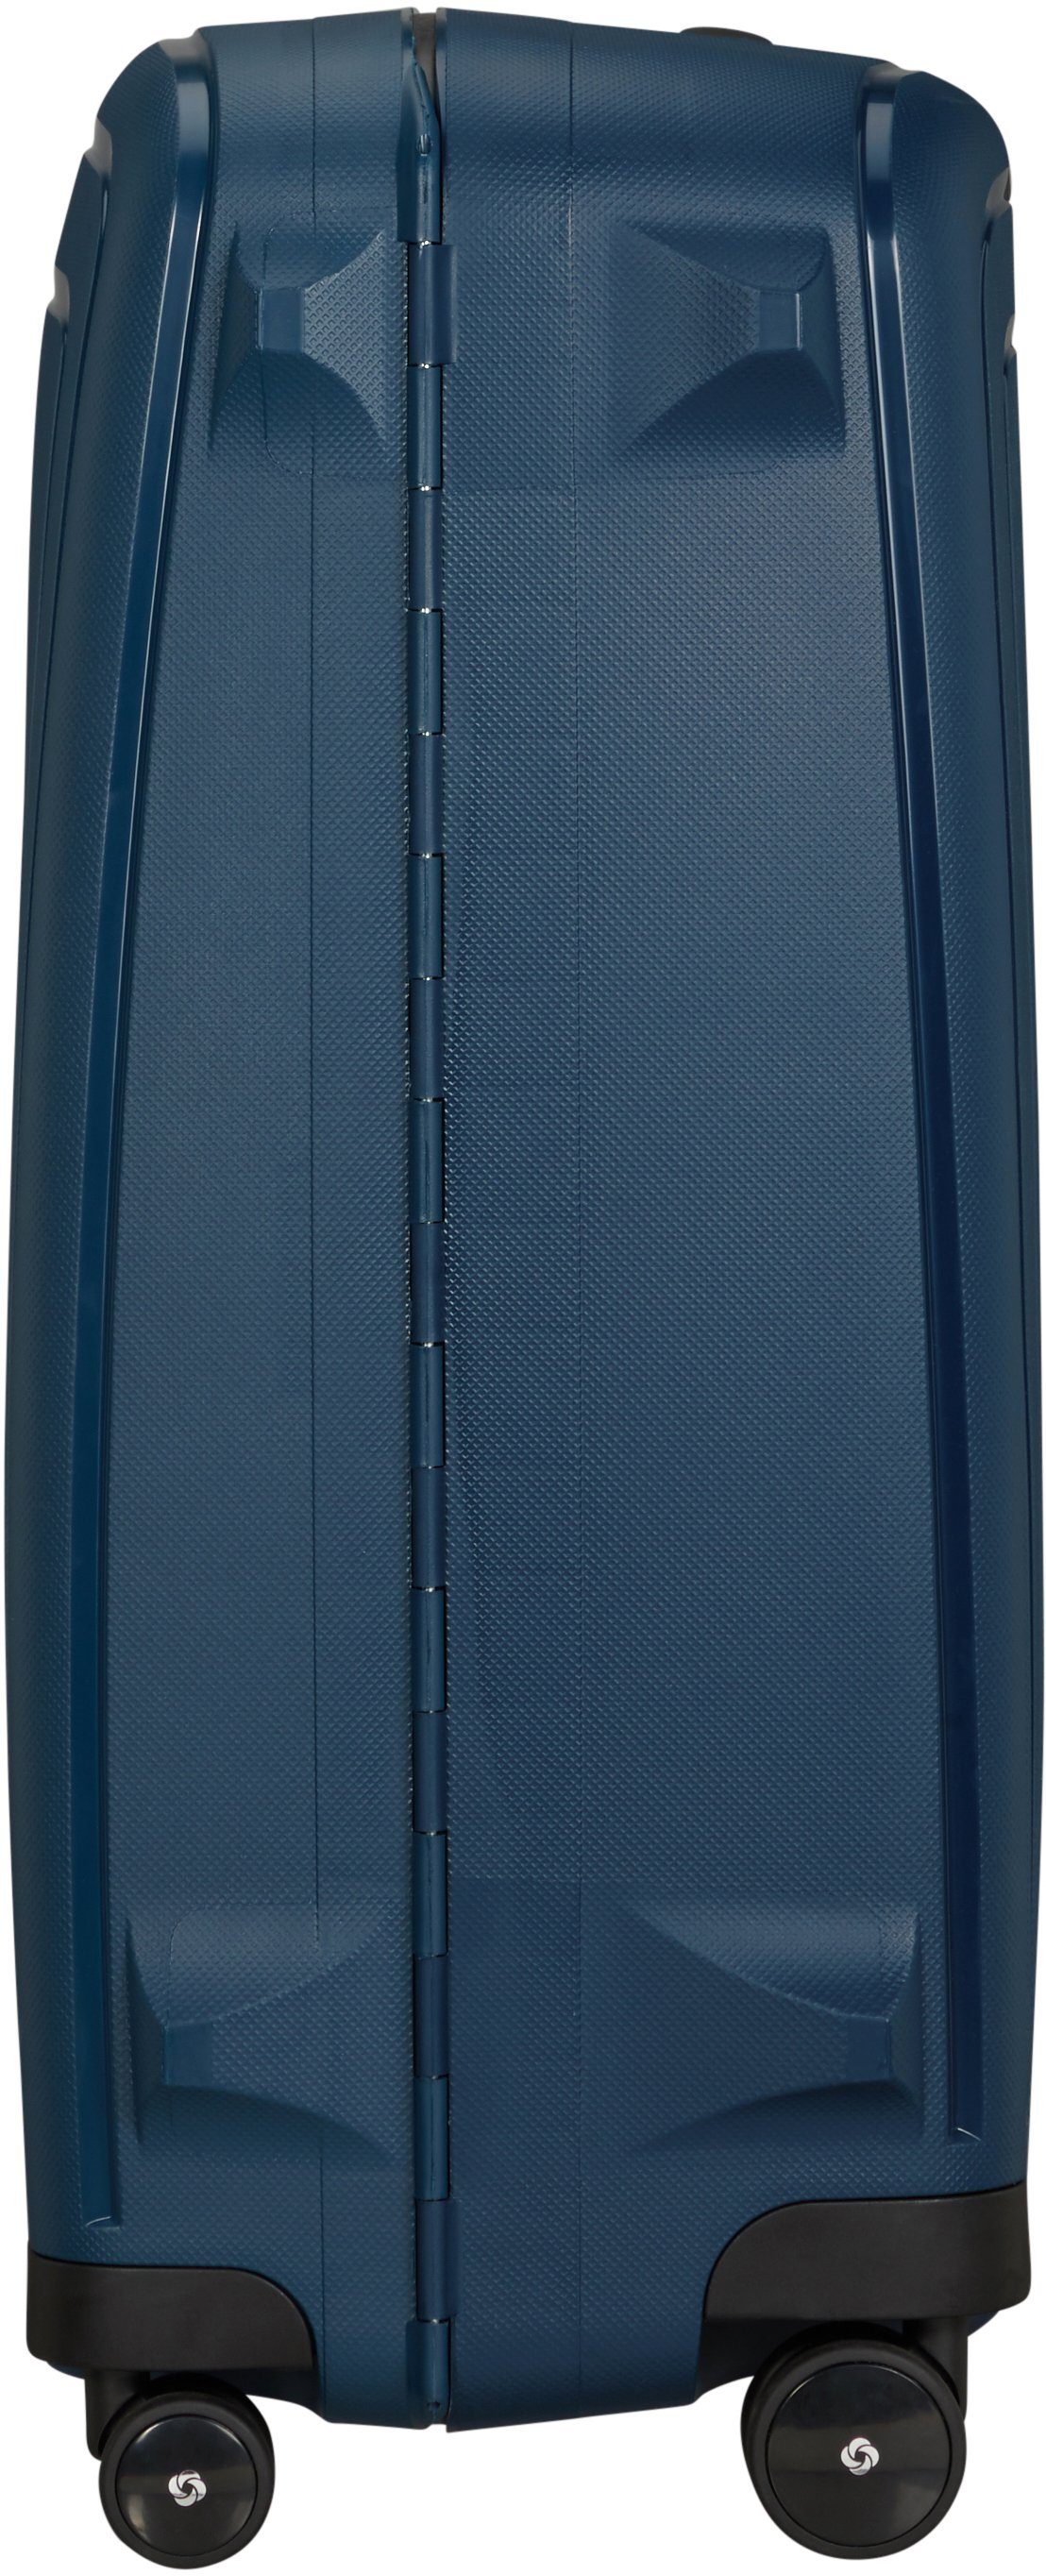 Samsonite Made enthält Hartschalen-Trolley 69 4 Navy cm, Blue Europe; recyceltes Eco, Rollen, S'CURE Material in